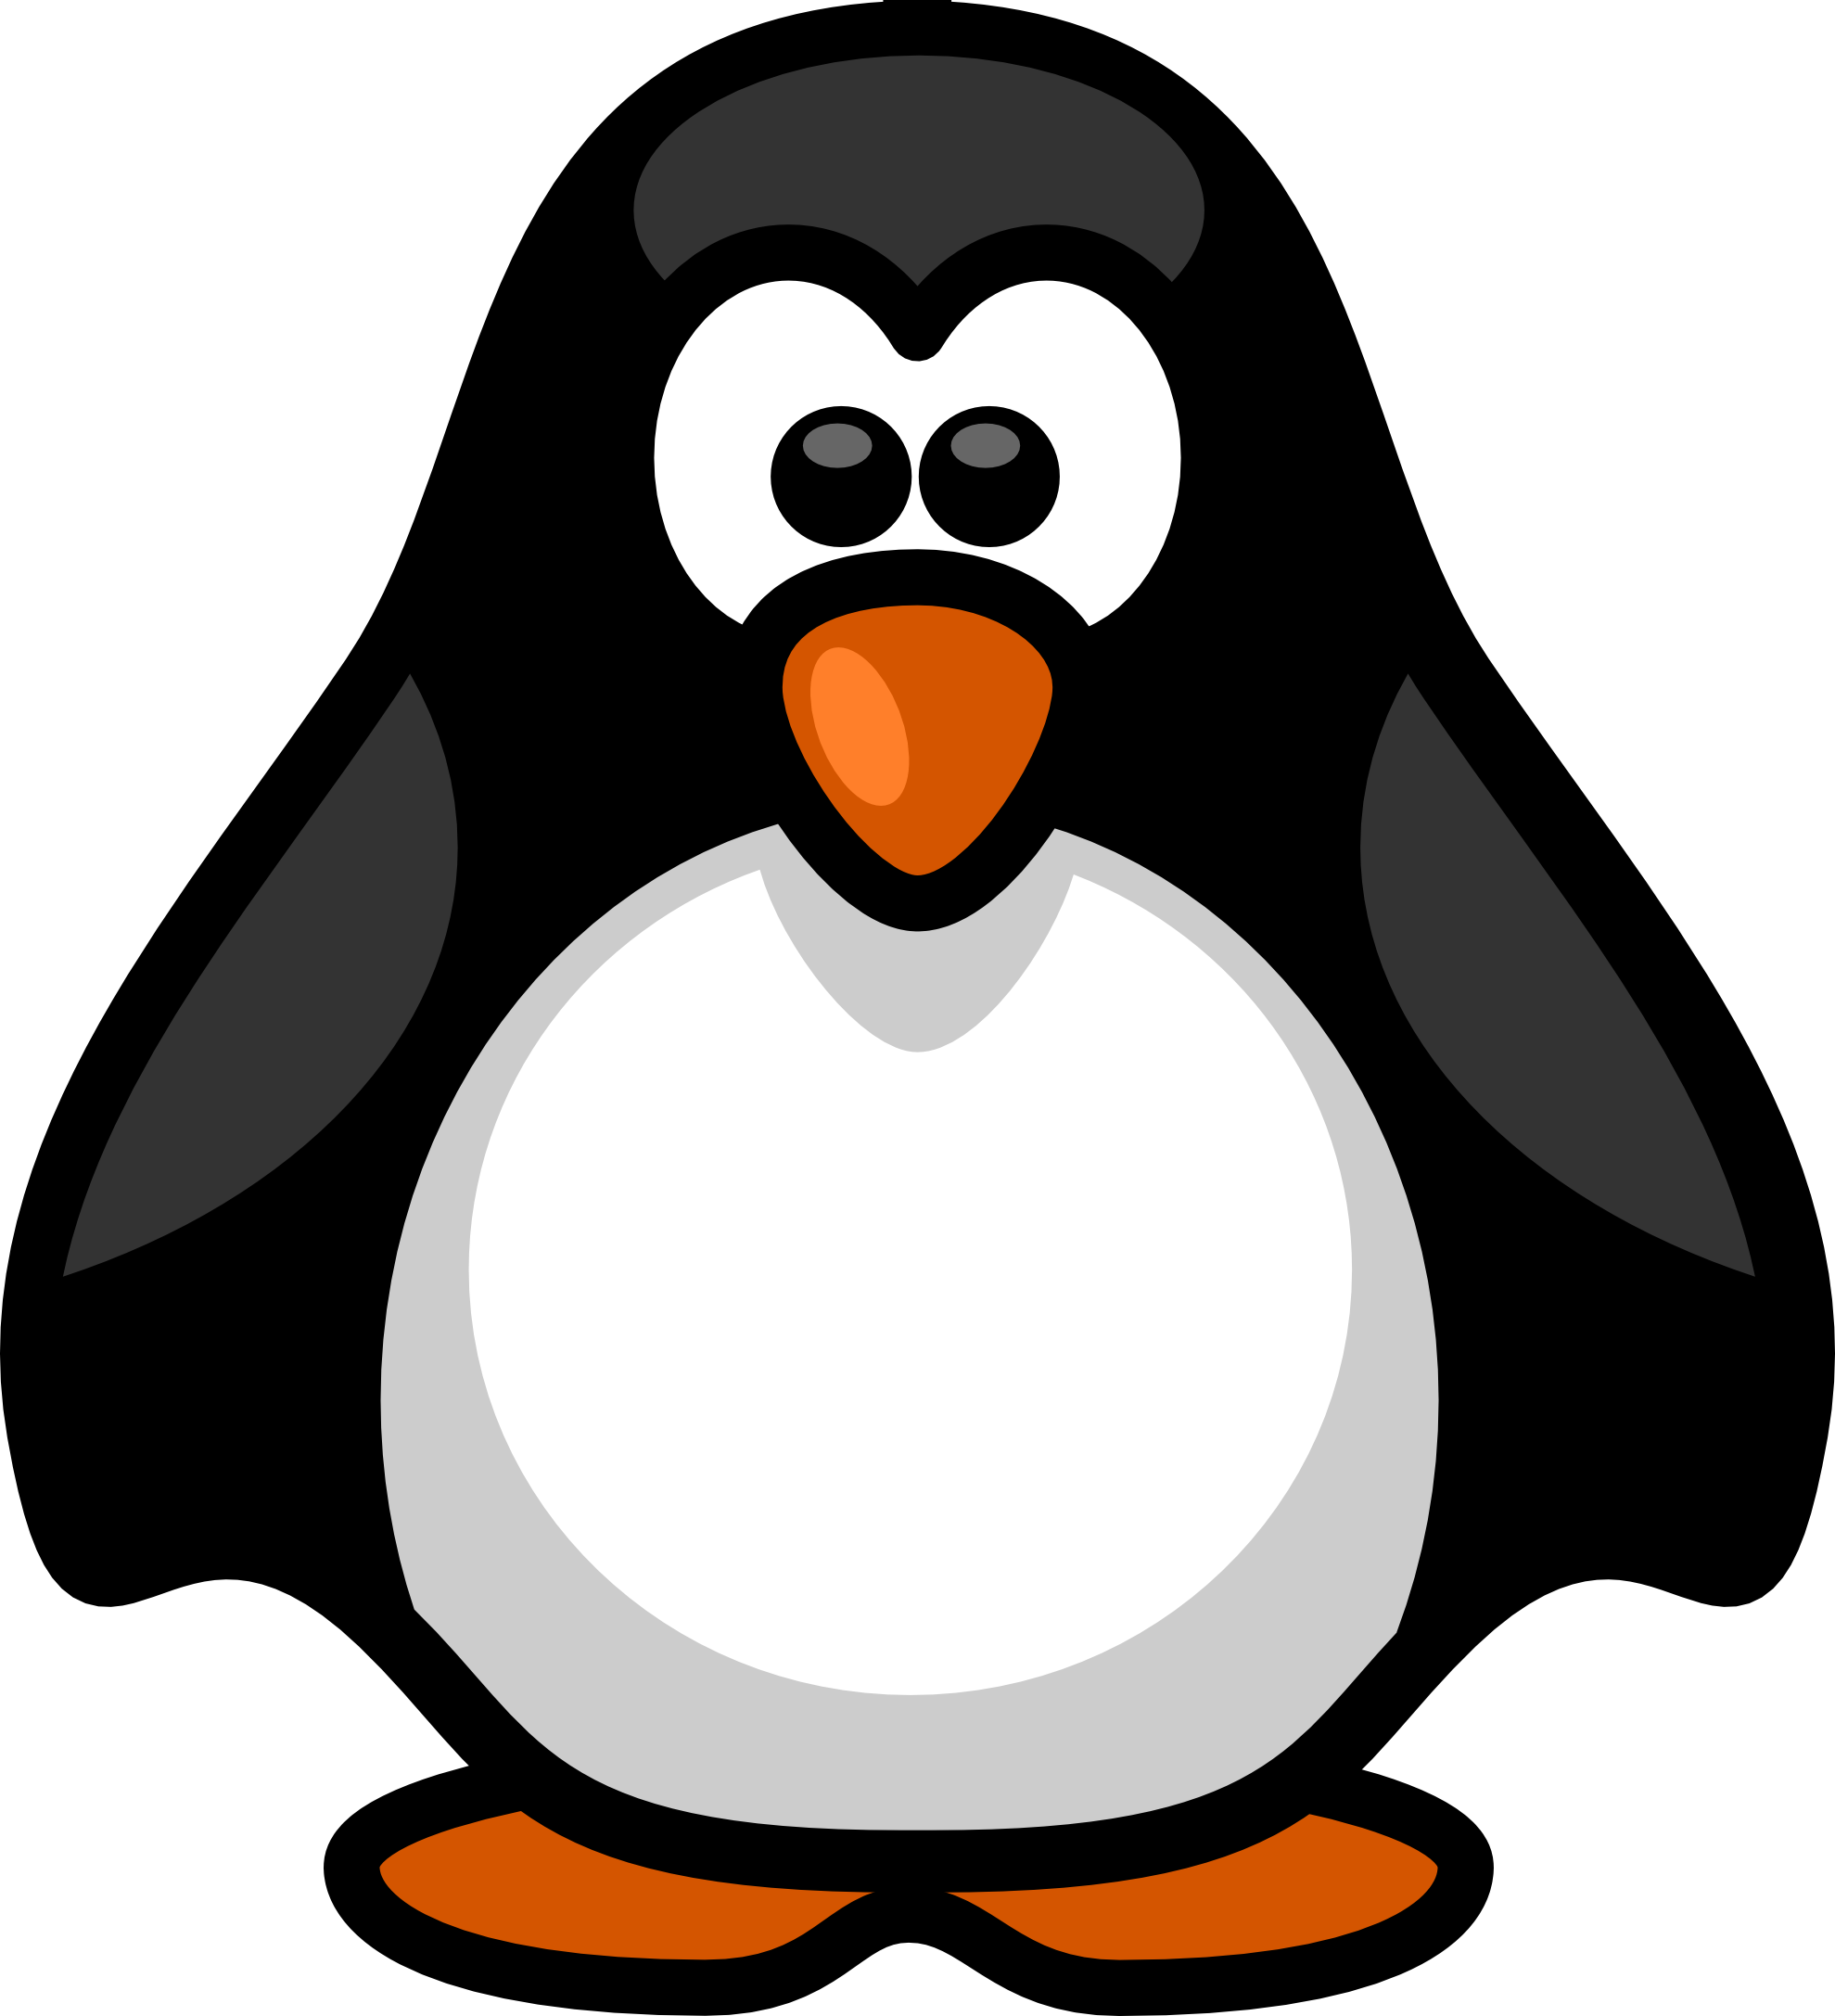 Penguin PNG Transparent Images | PNG All